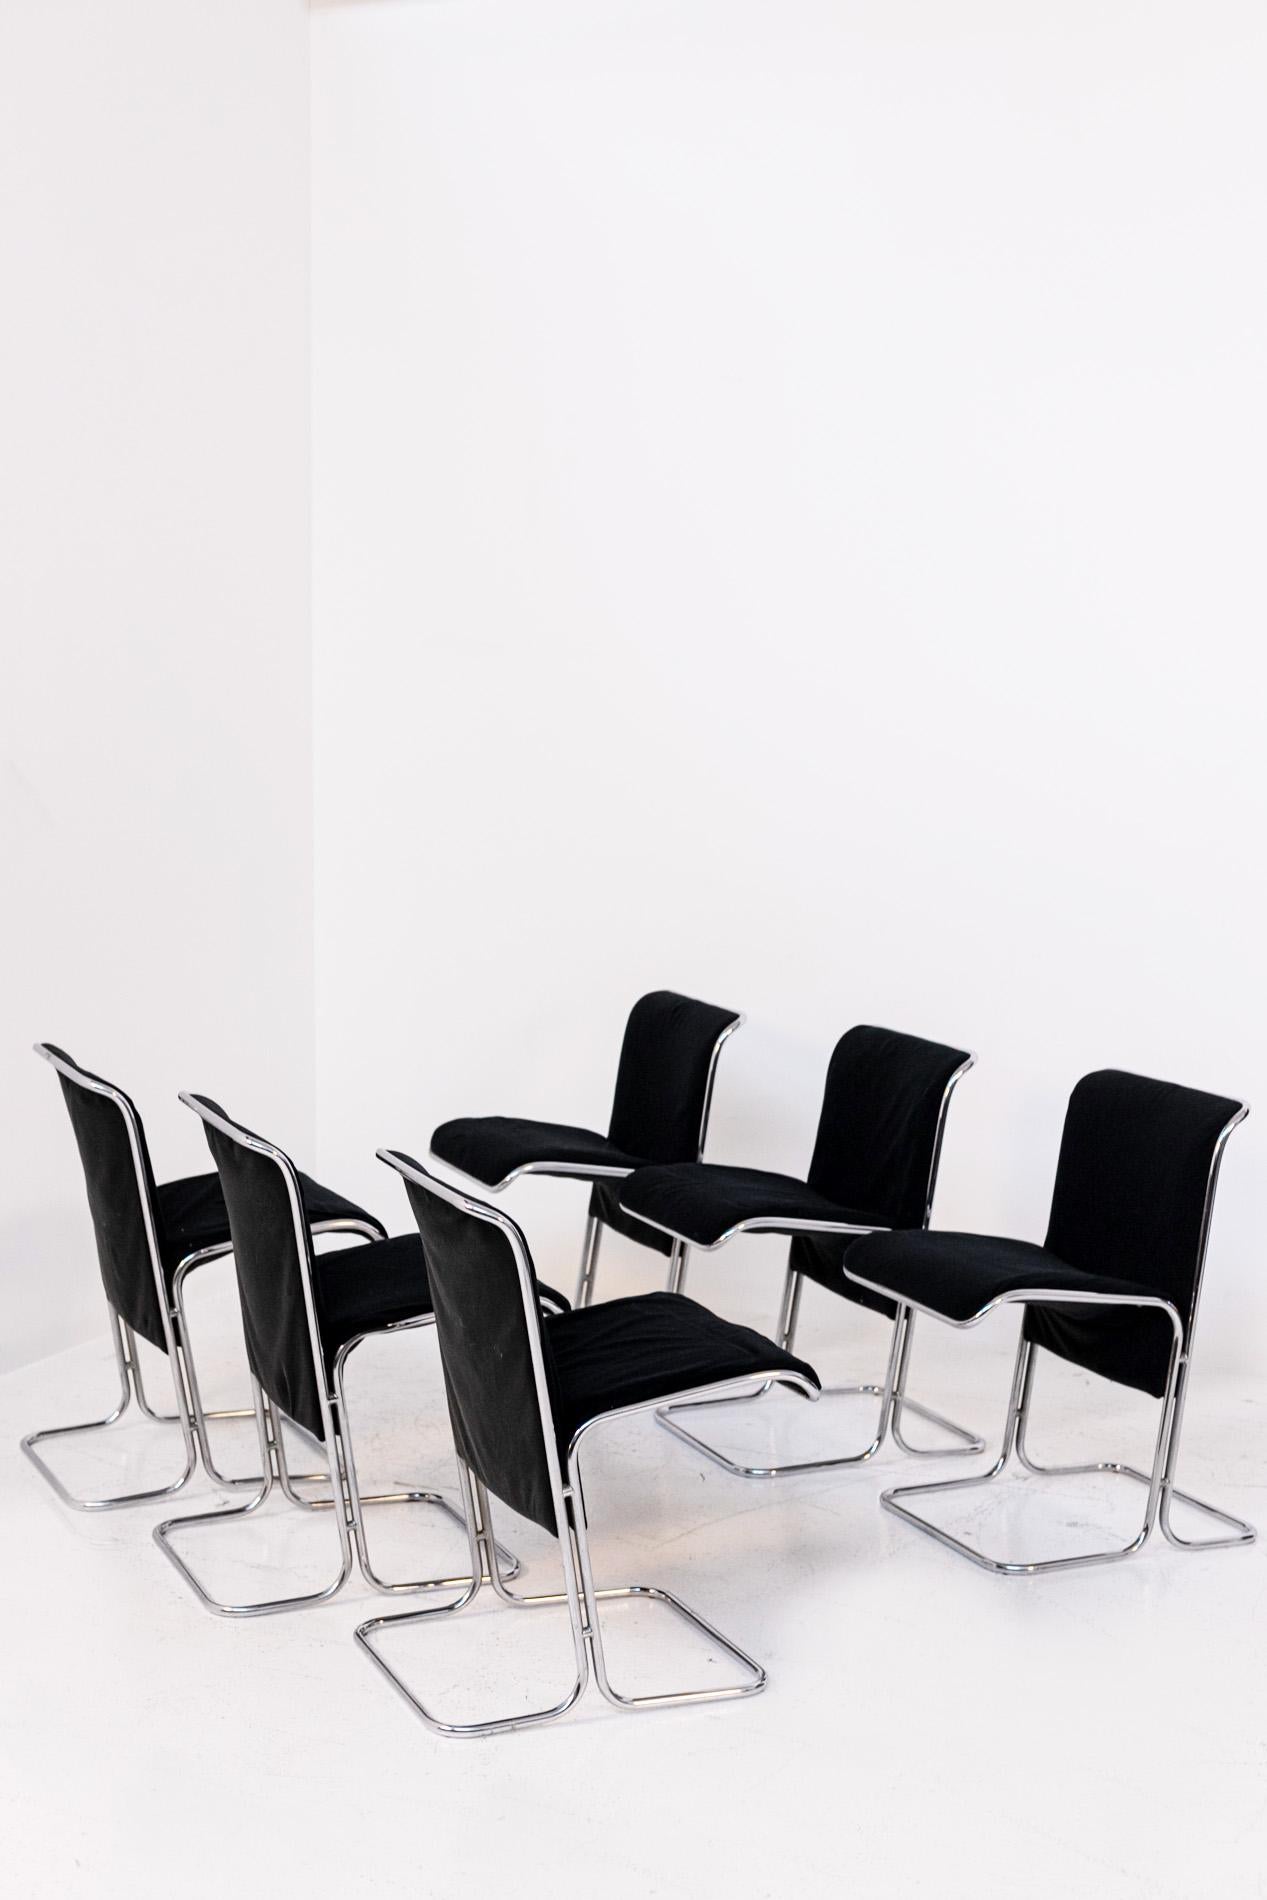 Late 20th Century Italian Chairs by Antonio Ari Colombo for Arflex Mod. Calla in Black Velvet